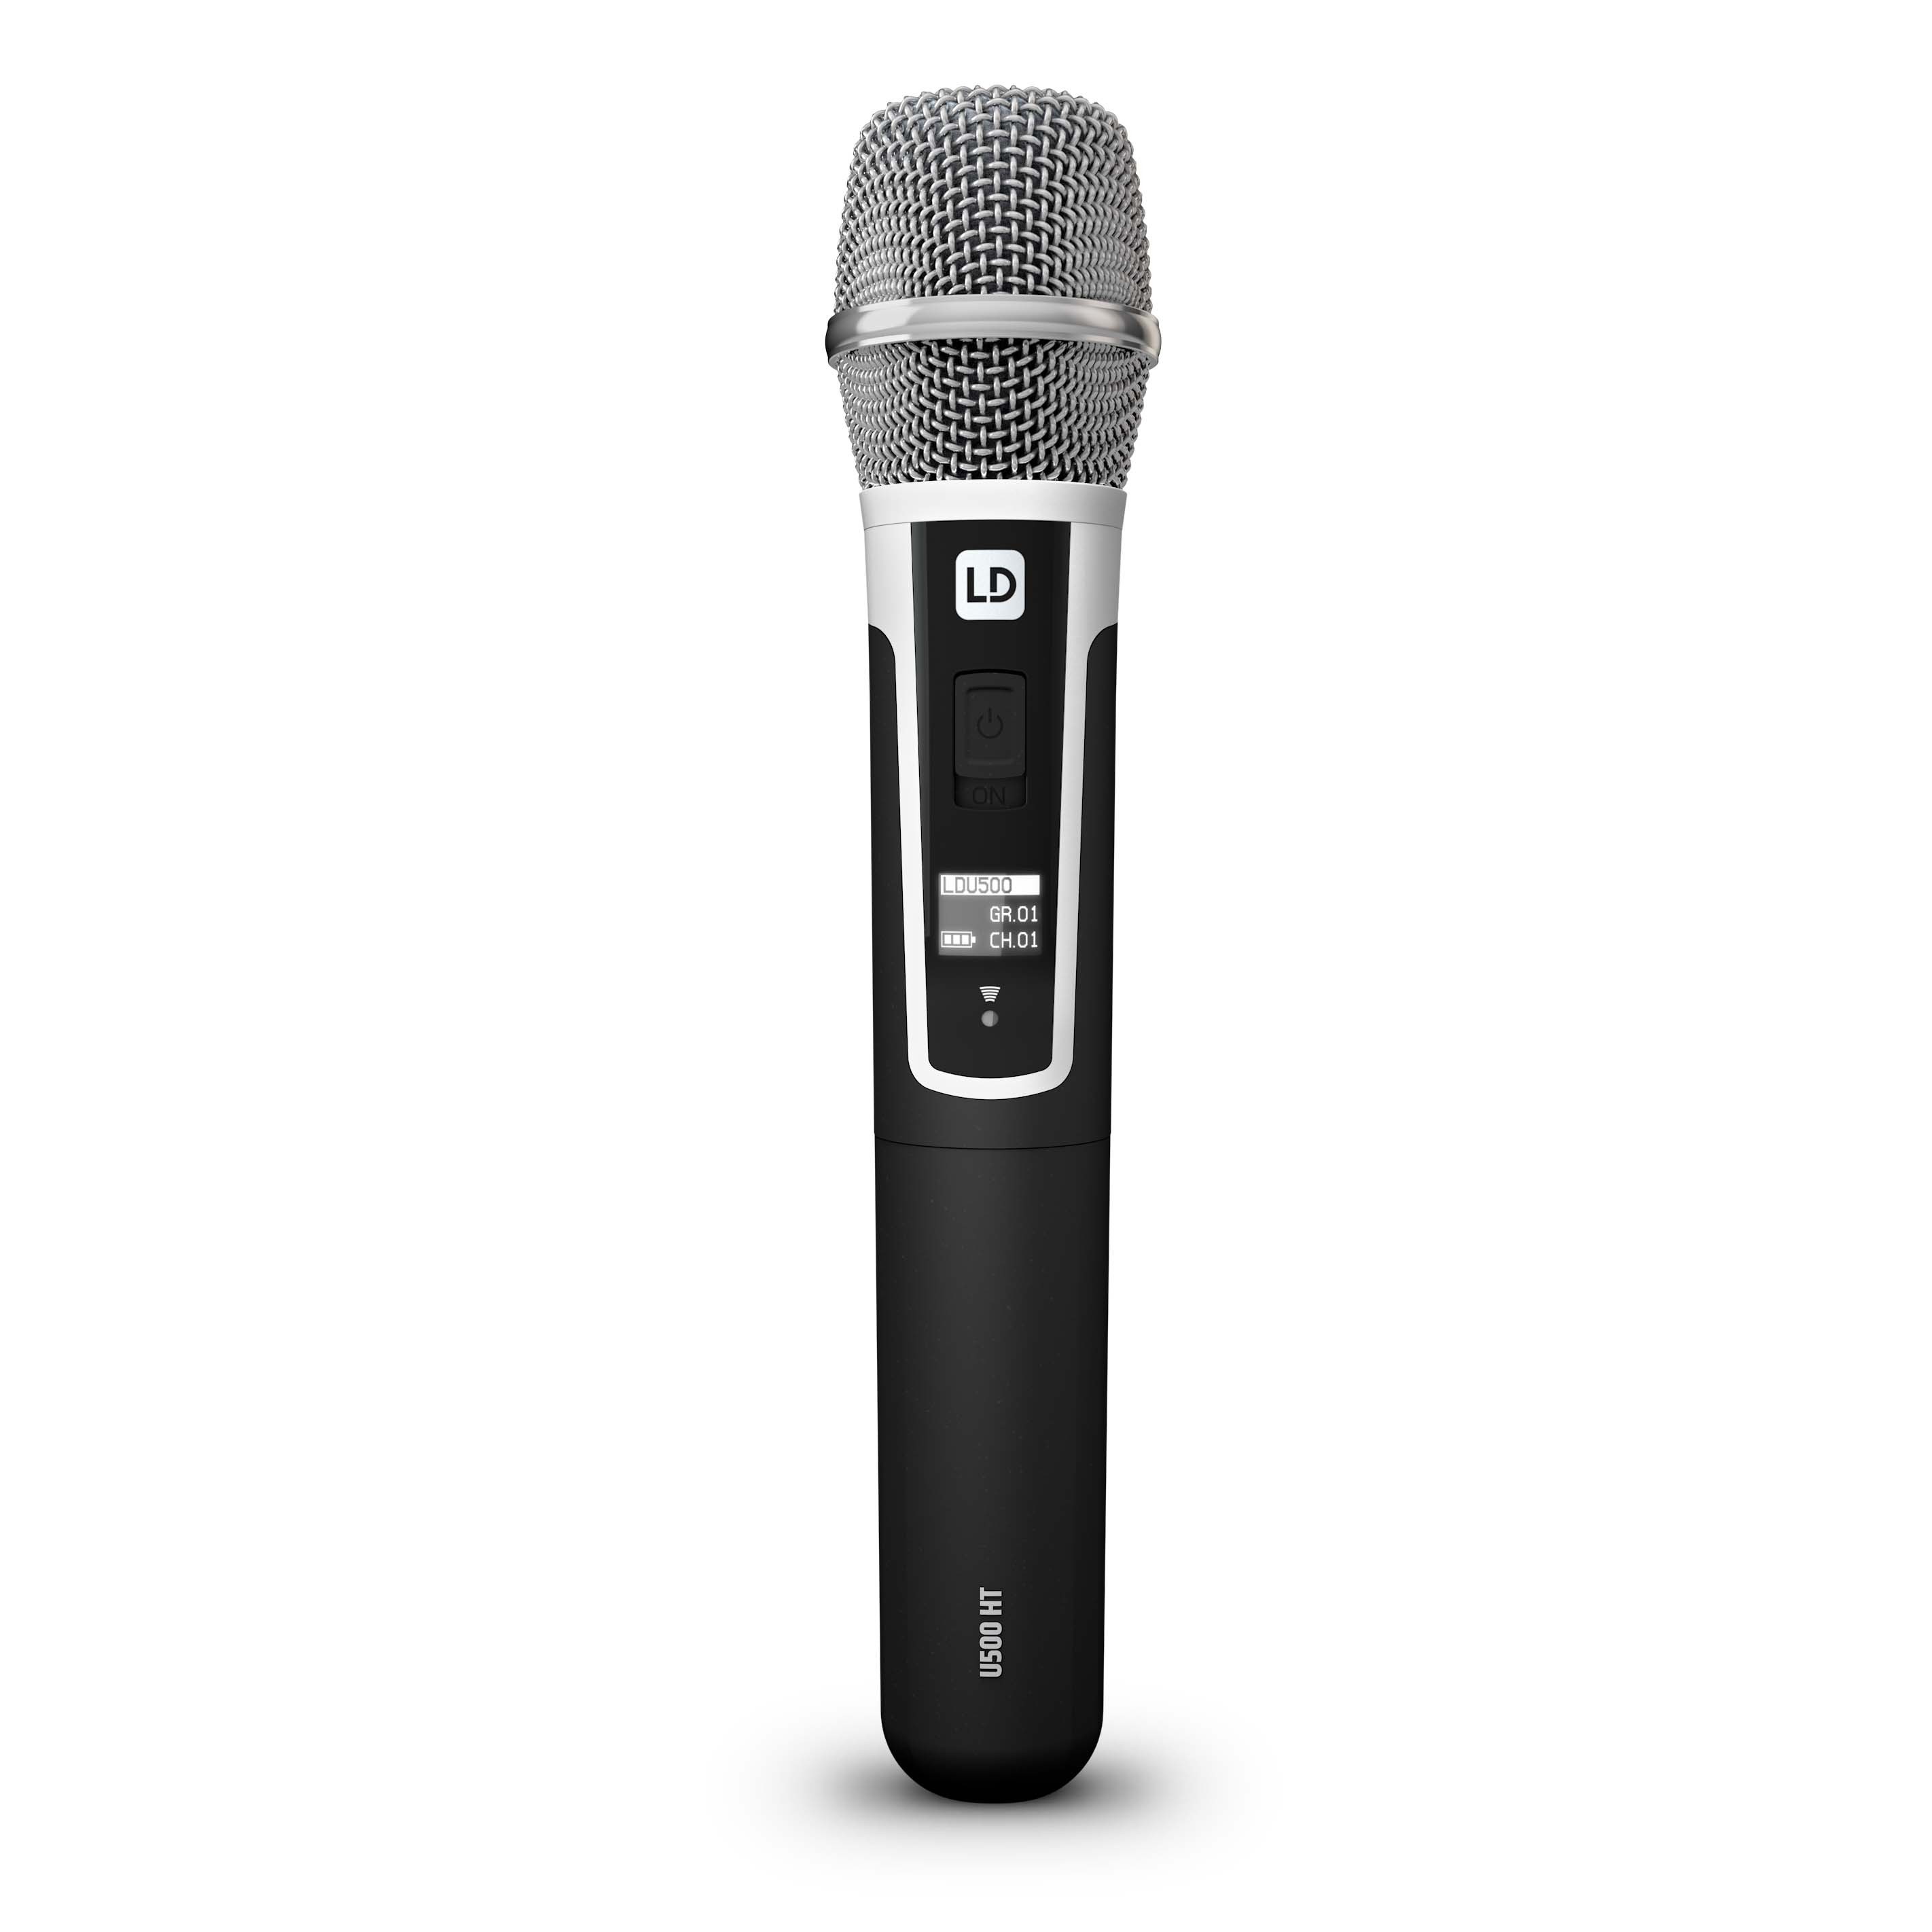 Ld Systems U505 Hhc - Wireless handheld microphone - Variation 4